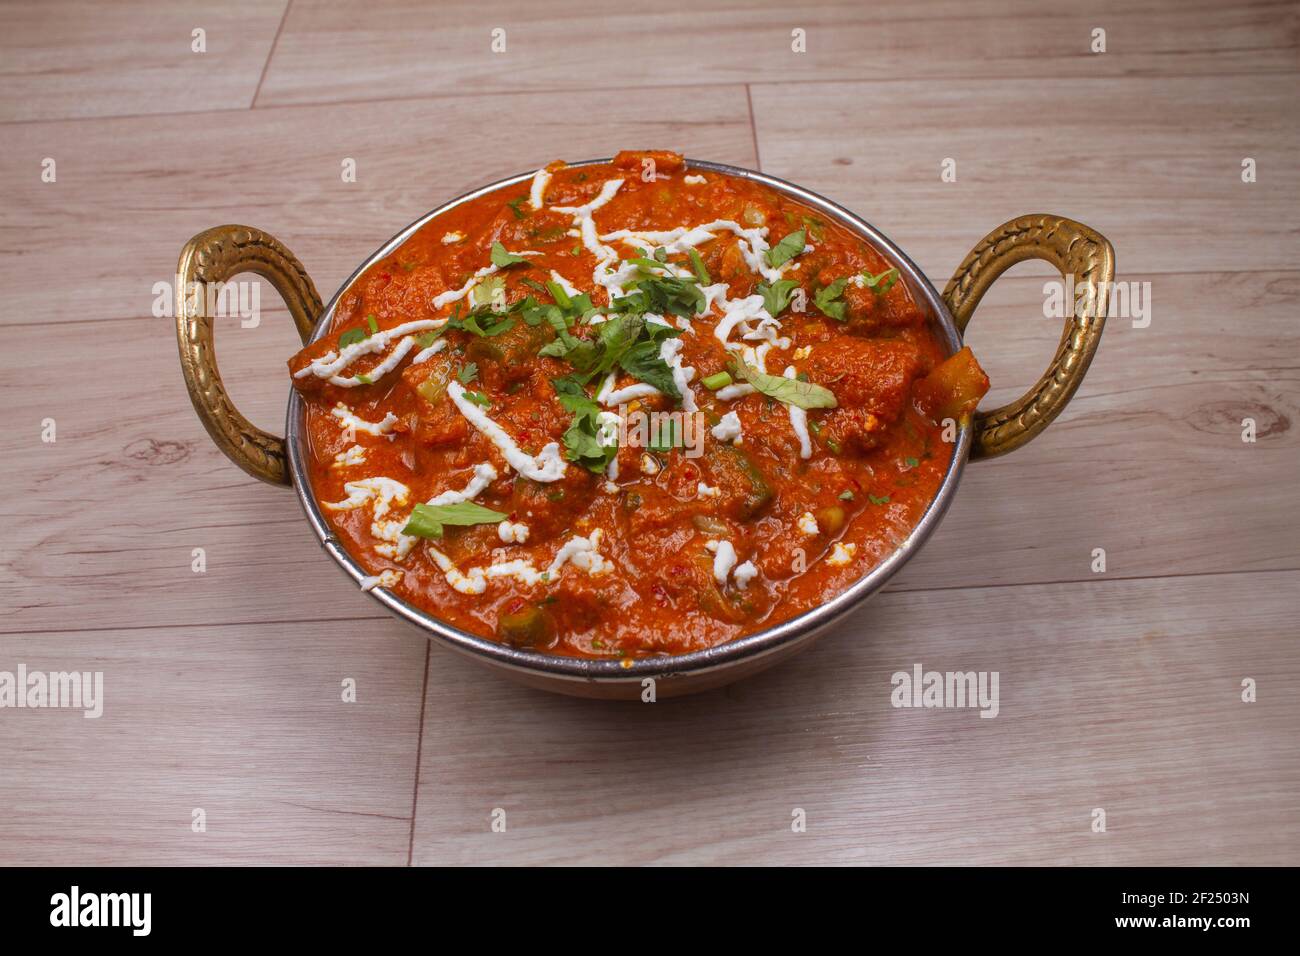 https://c8.alamy.com/comp/2F2503N/overhead-view-of-veg-kadai-or-veg-curry-roast-hot-and-spicy-gray-dish-mumbai-delhi-india-north-indian-pakistani-non-vegetarian-cuisine-prepared-in-g-2F2503N.jpg